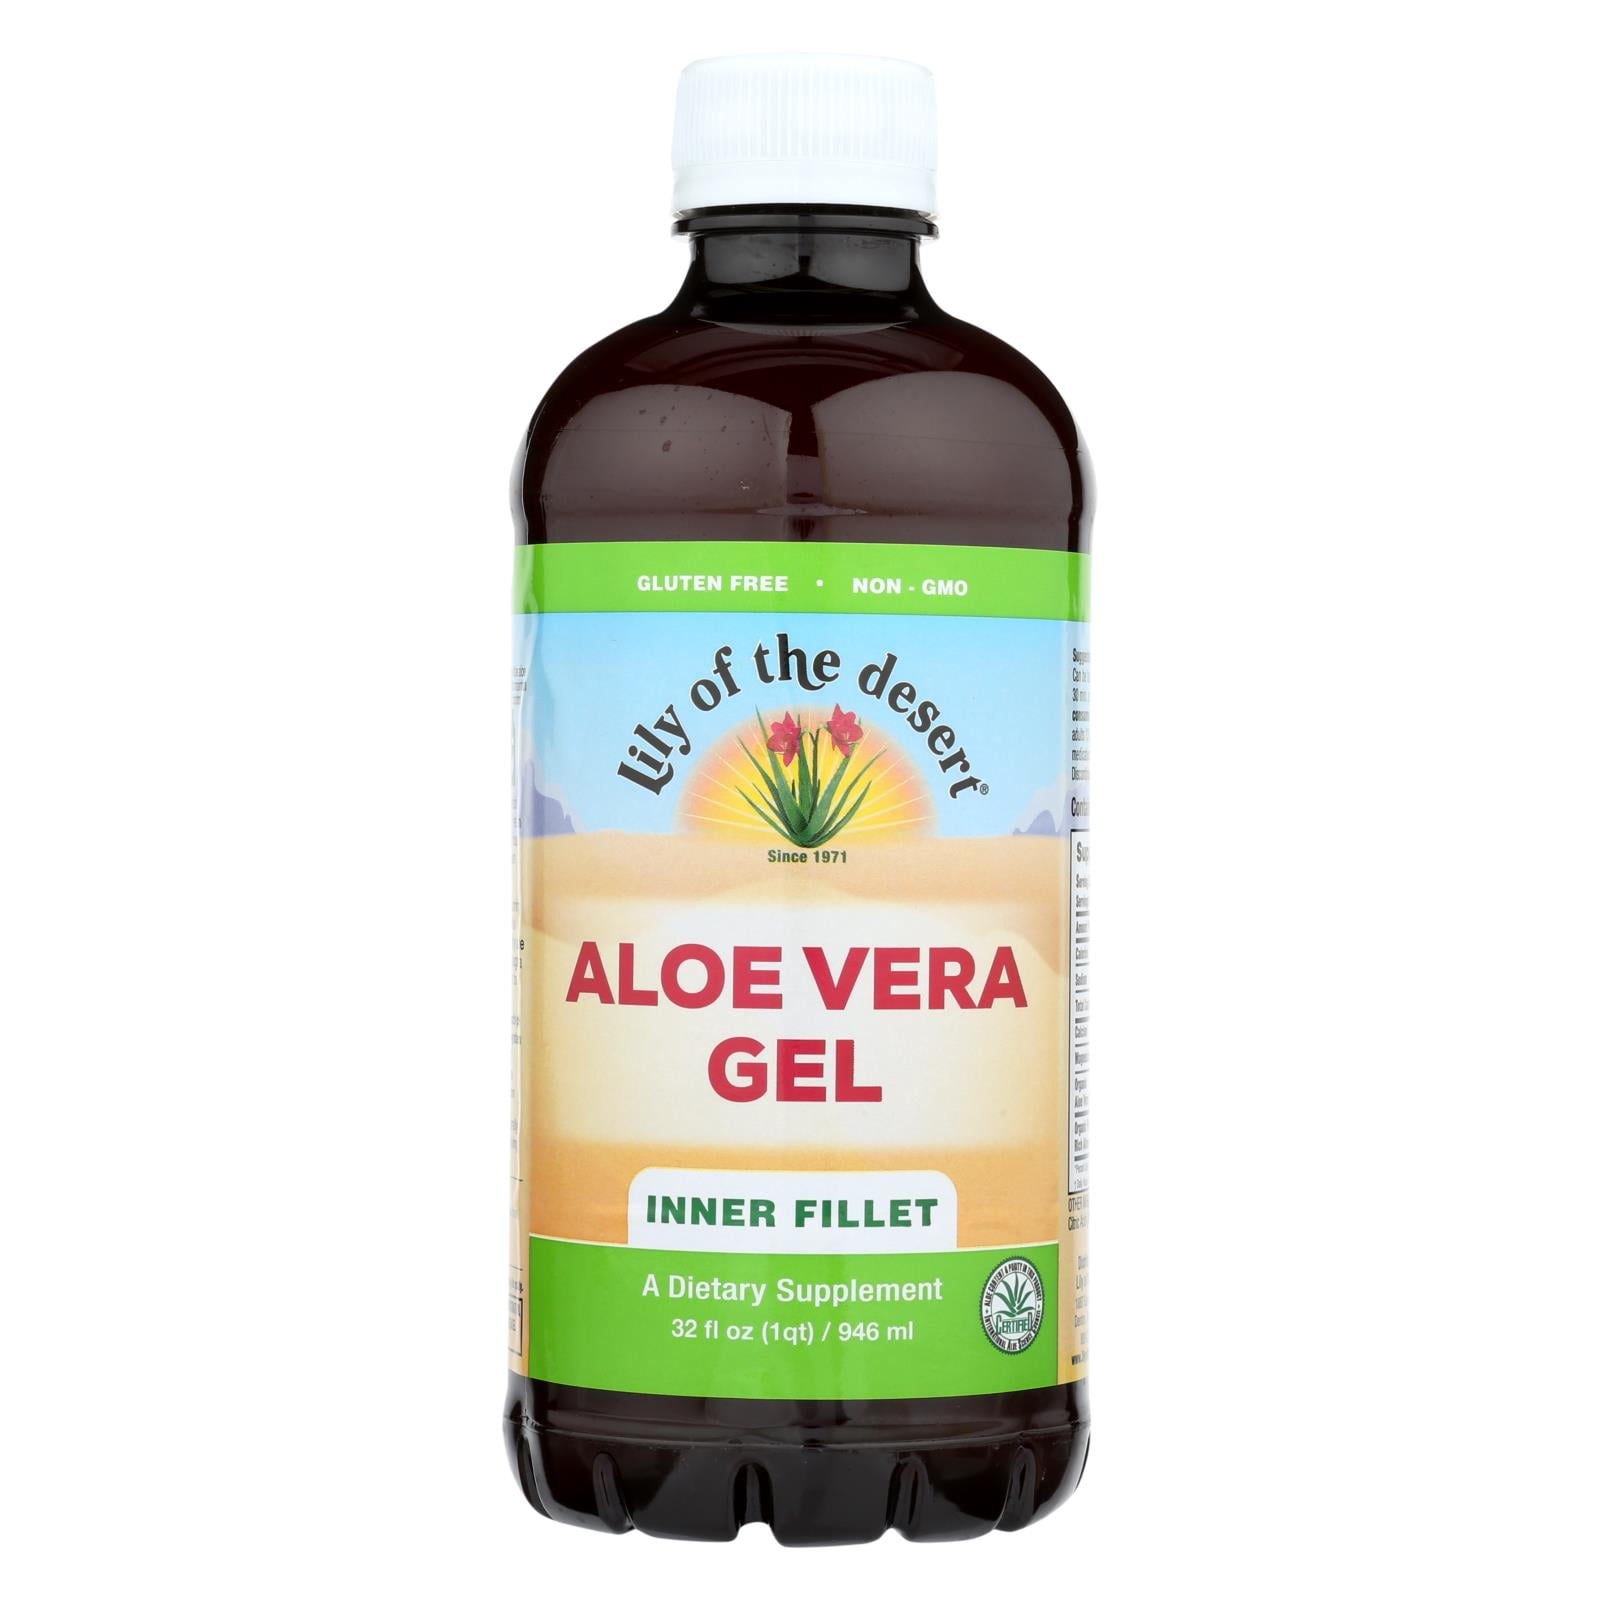 Forever Aloe Vera GEL PARA BEBER: ¡natural! 🦛 - Anuto Marketplace